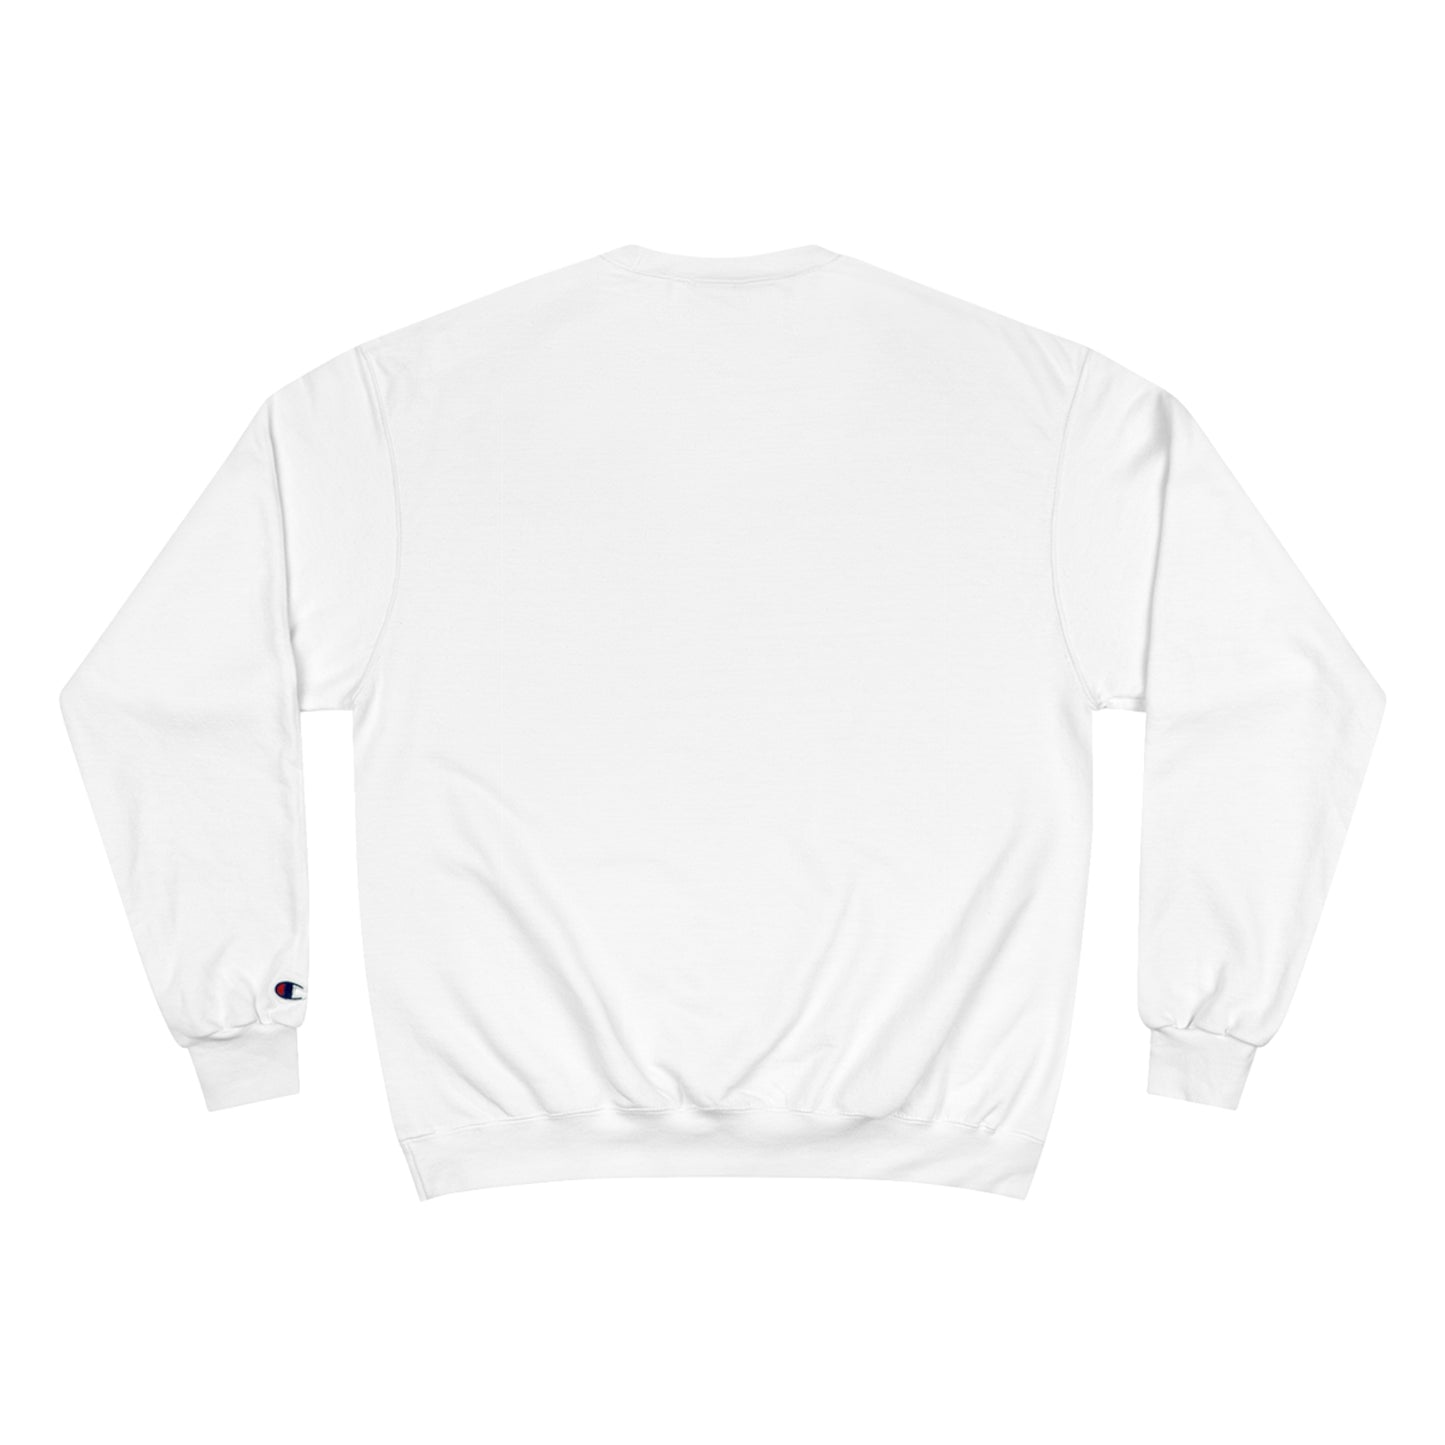 Boutique - Dekalb Ave & Brooklyn Tech Pl  - Champion Crewneck Sweatshirt - Black Graphic